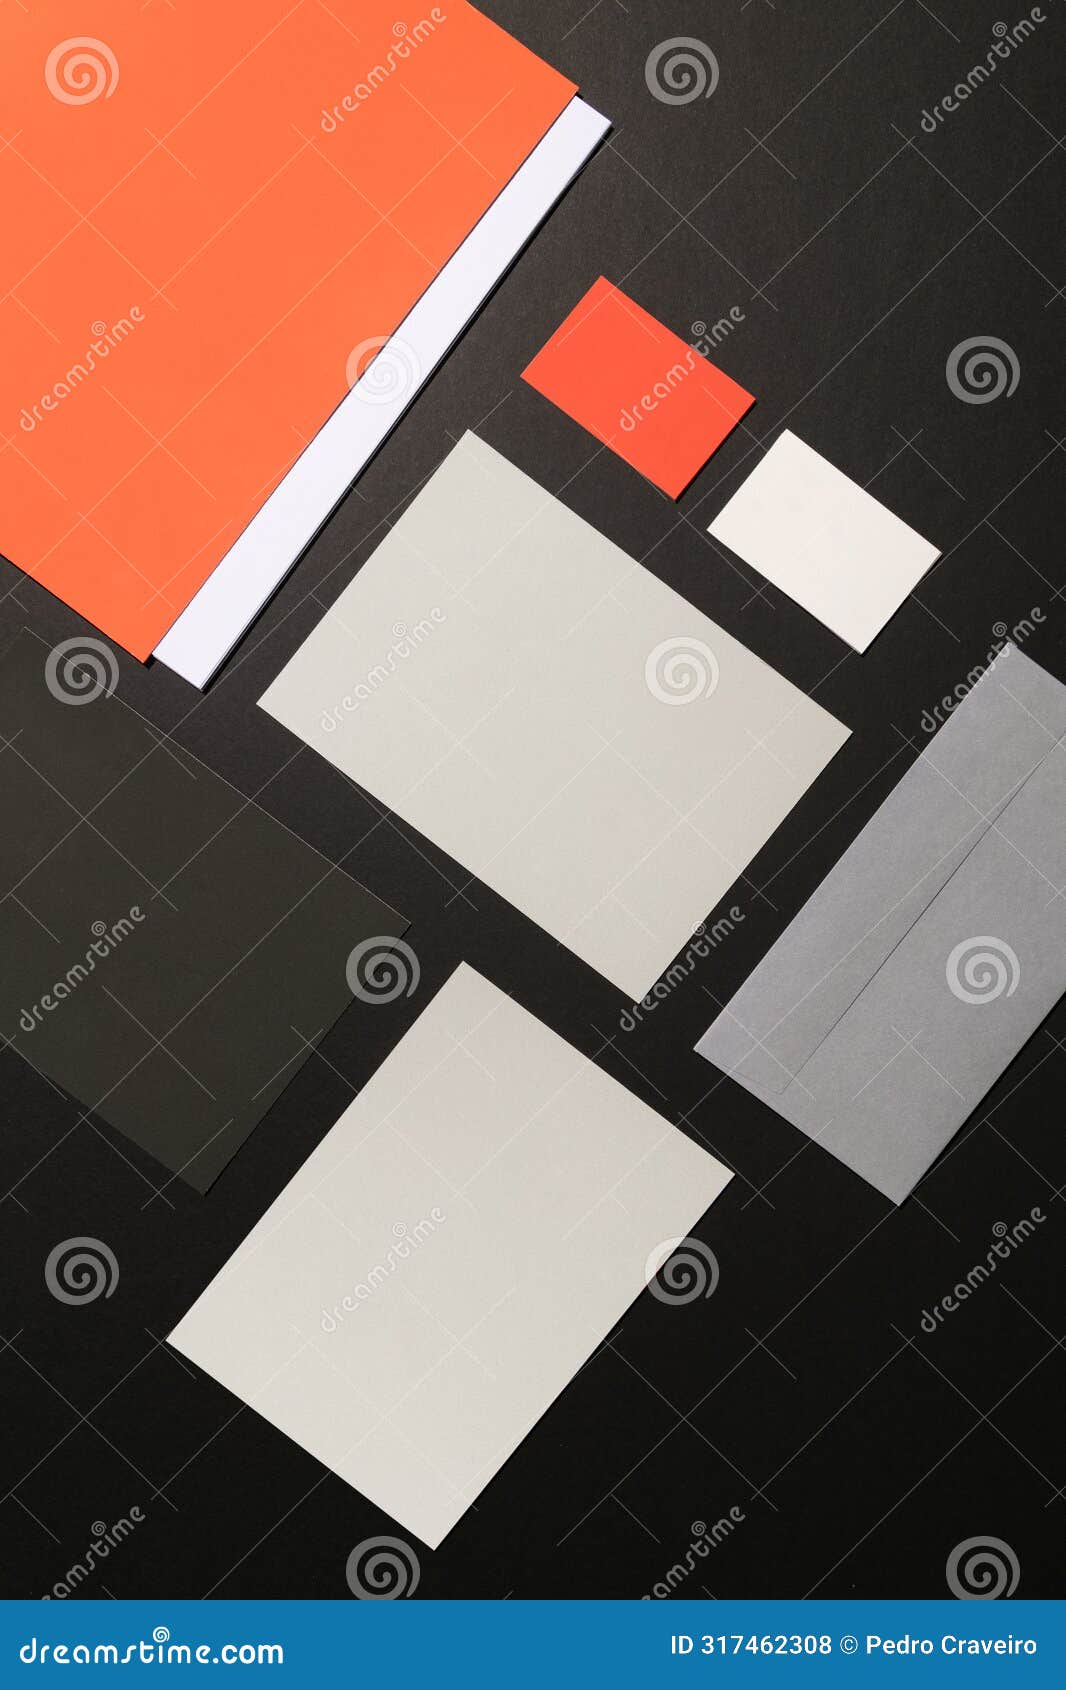 blank corporate stationery on dark background. mocks the brand. orange tones